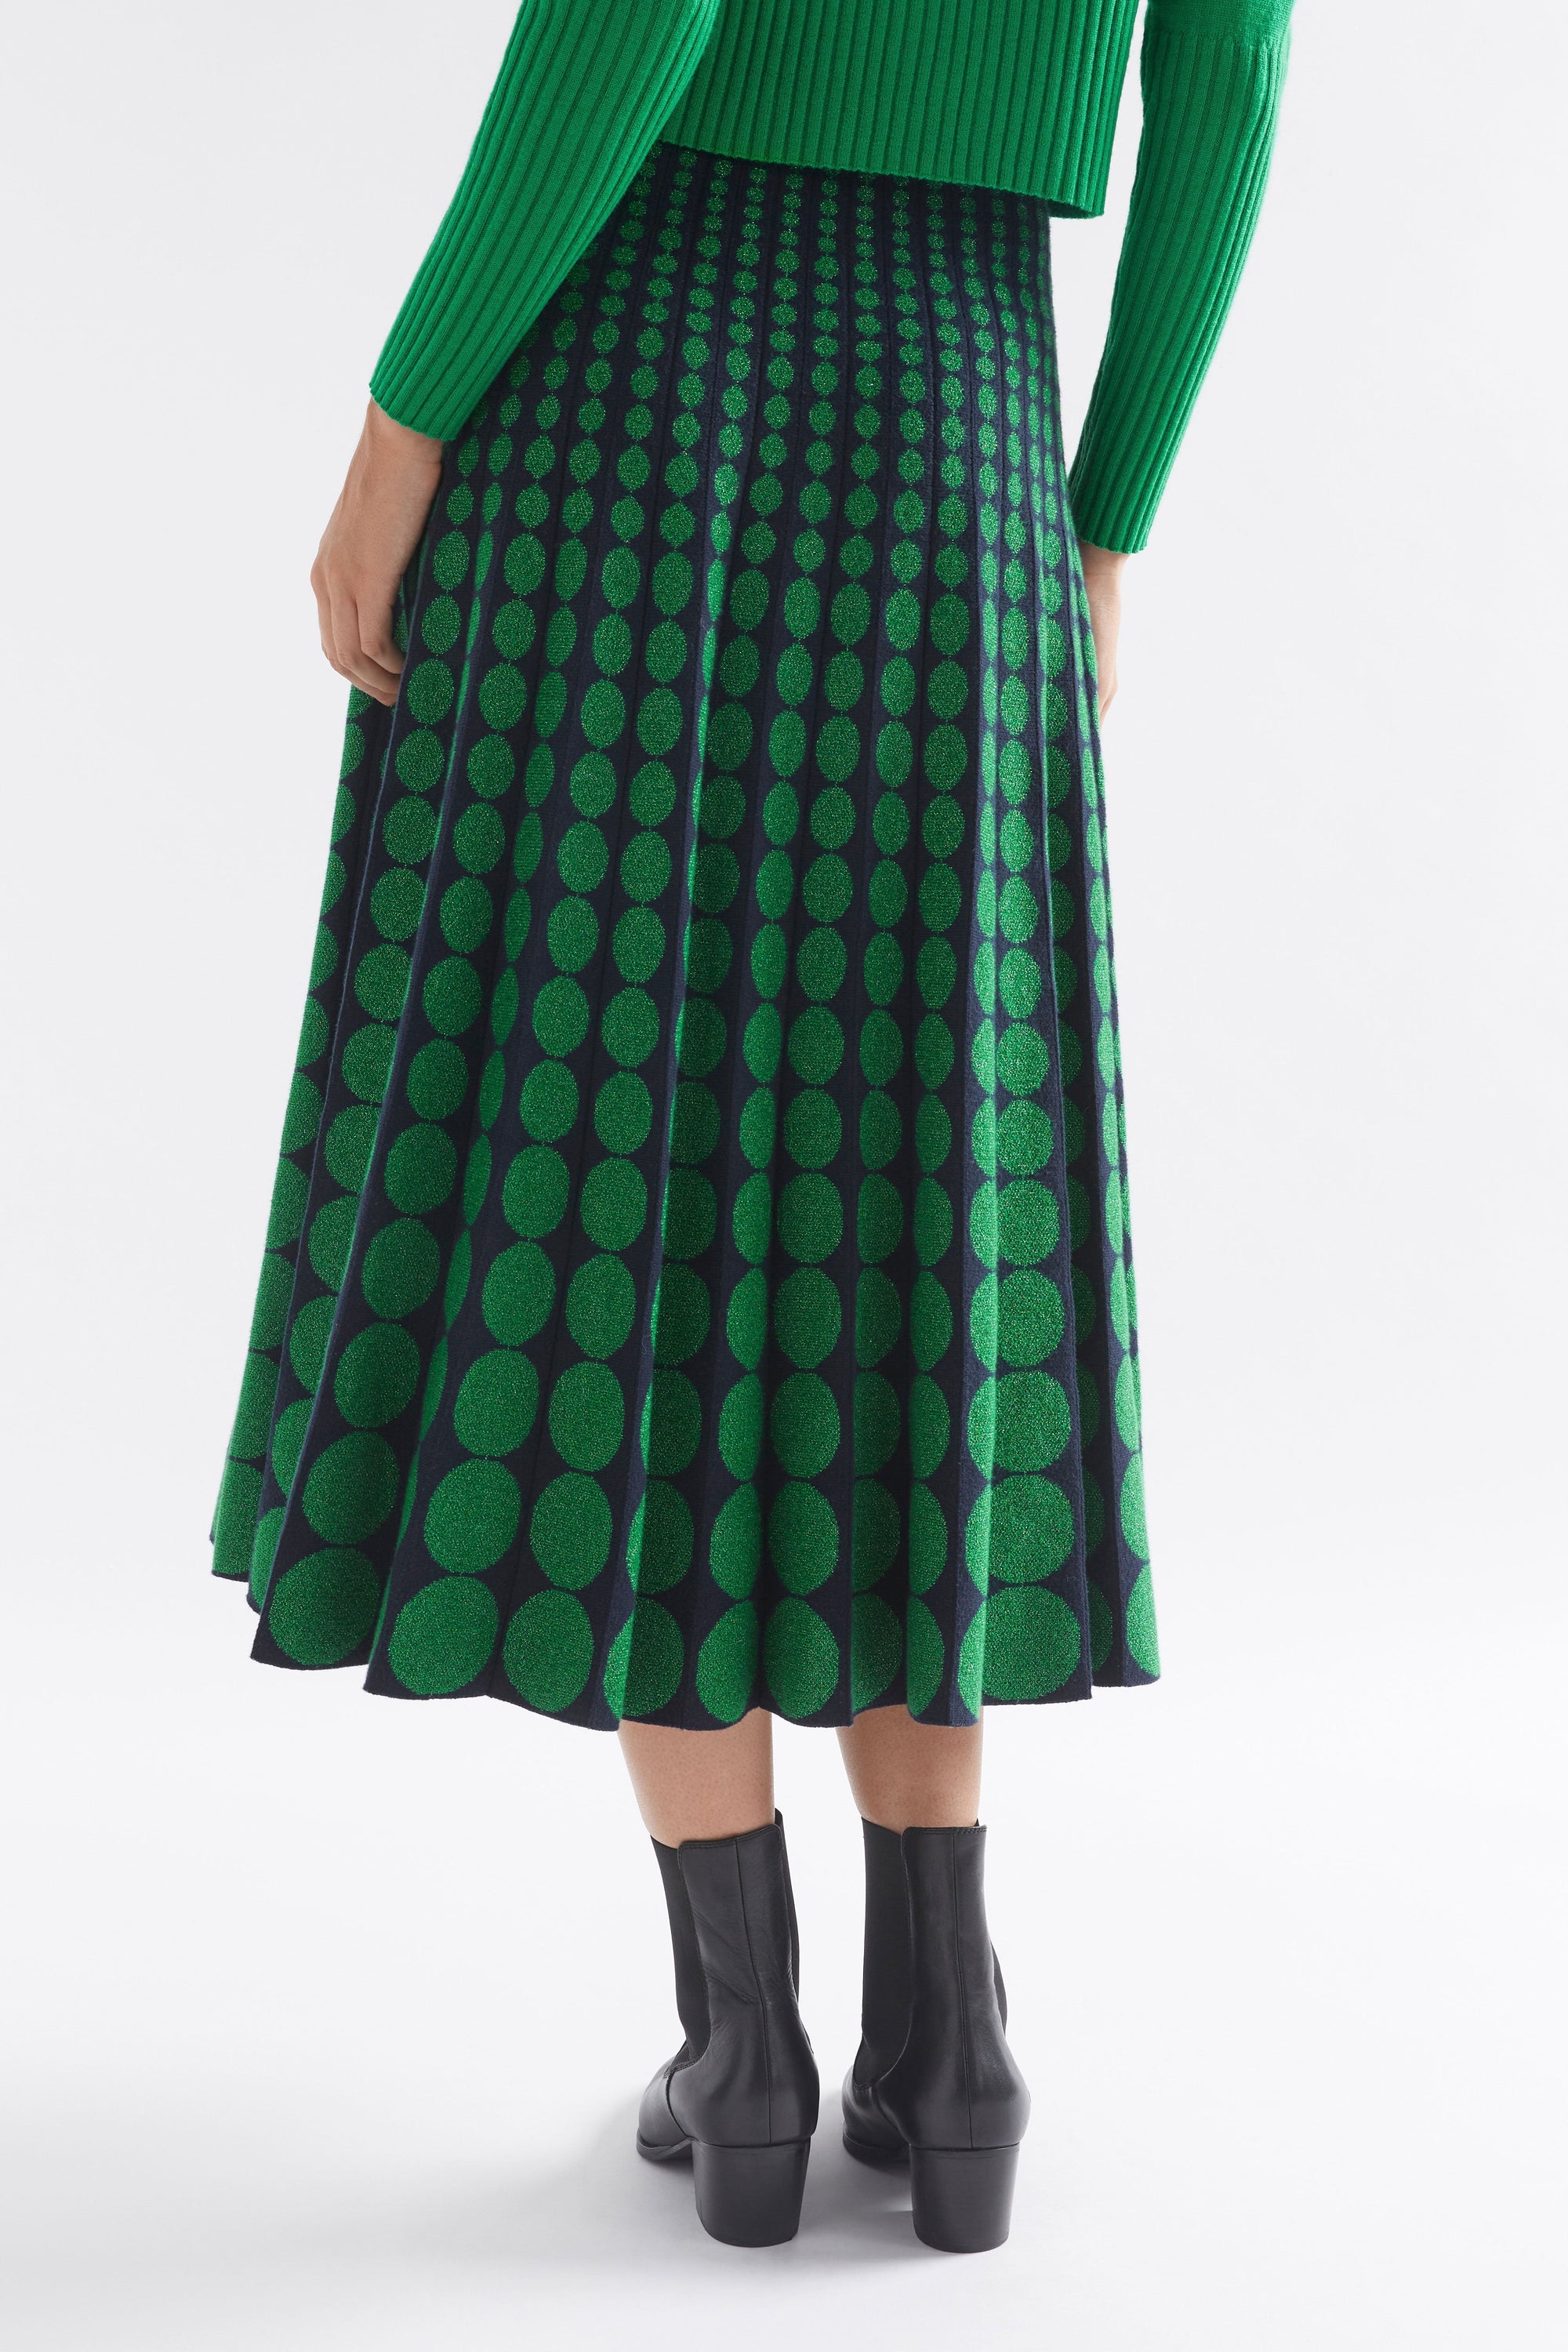 Leira Knit Skirt